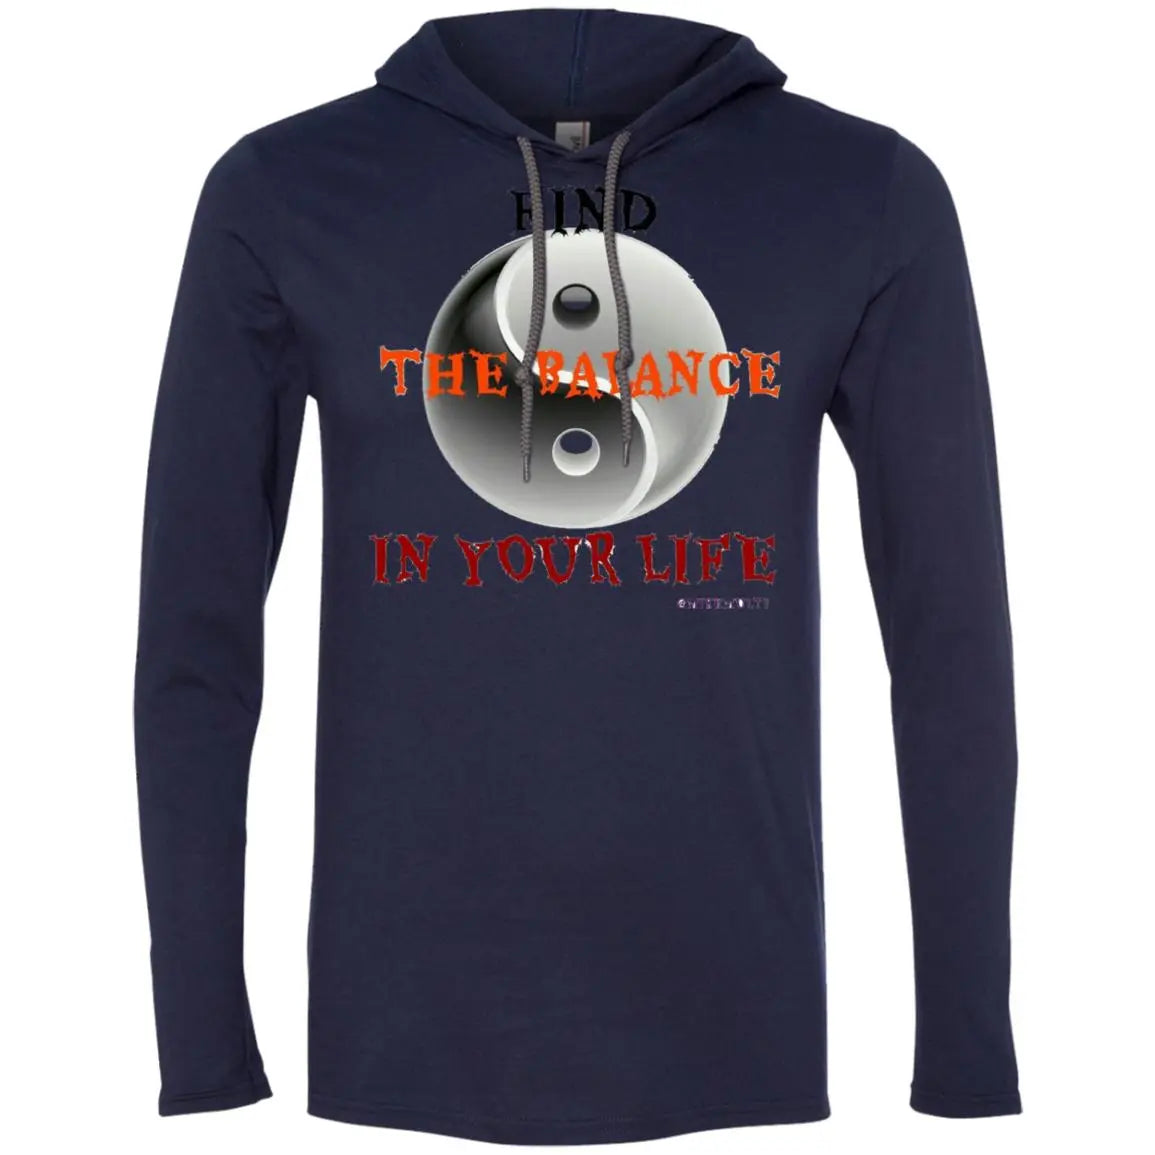 Find The Balance In Your Life - Men's LS T-Shirt Hoodie CustomCat